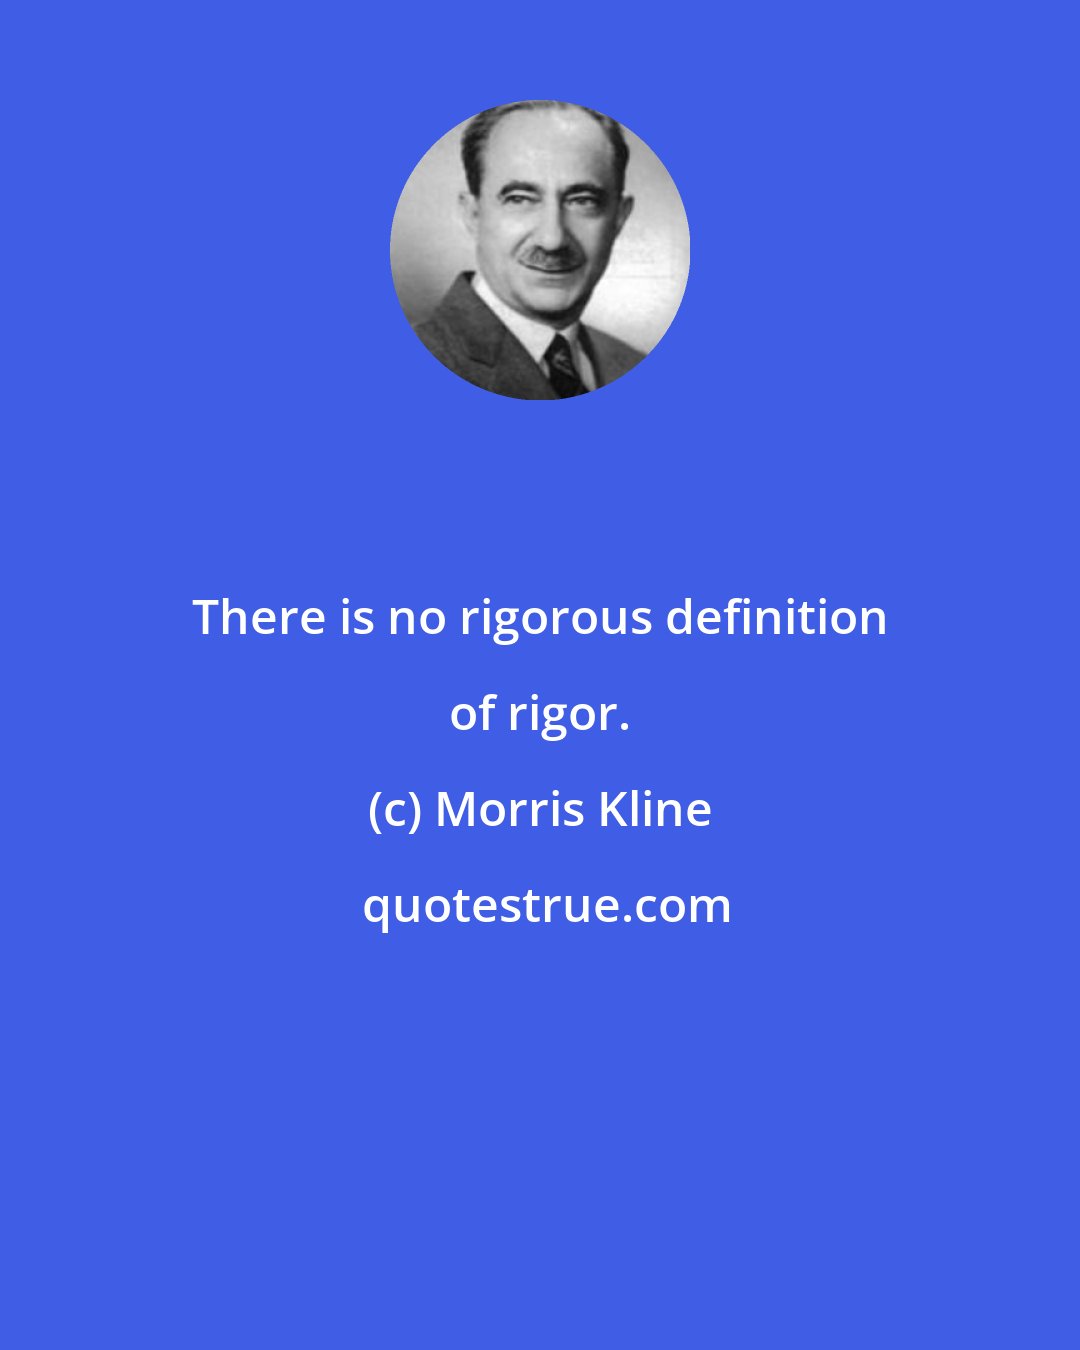 Morris Kline: There is no rigorous definition of rigor.